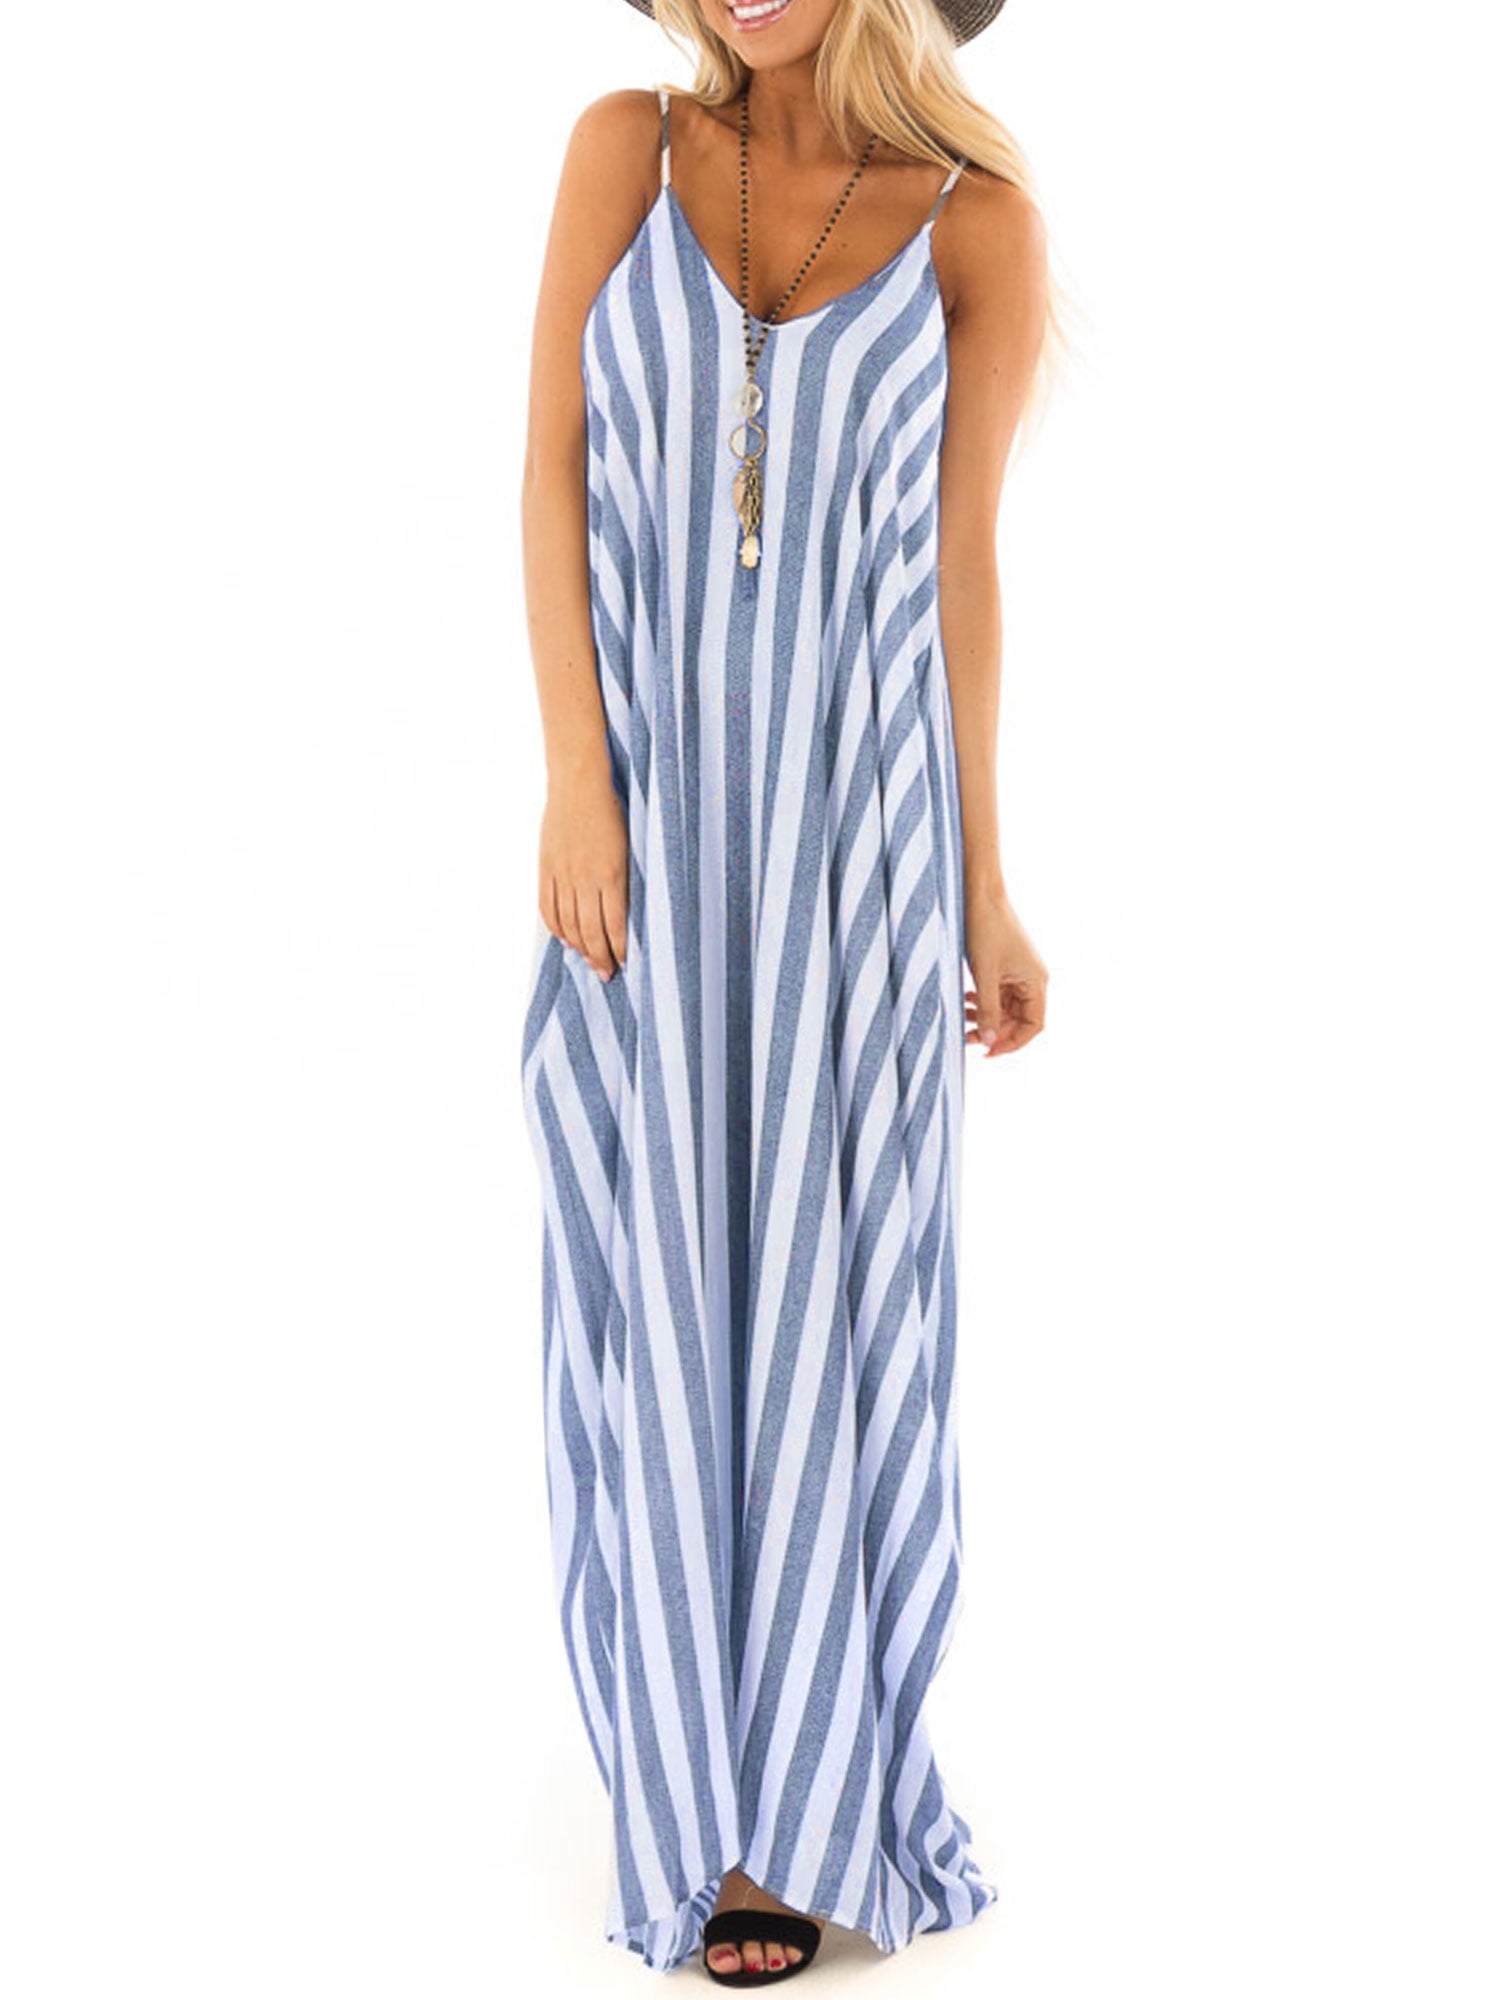 KYLEON Womens Dress Vintage Boho Printed Sleeveless Strap Ladies Summer Casual Party Beach Short Mini Sundress 